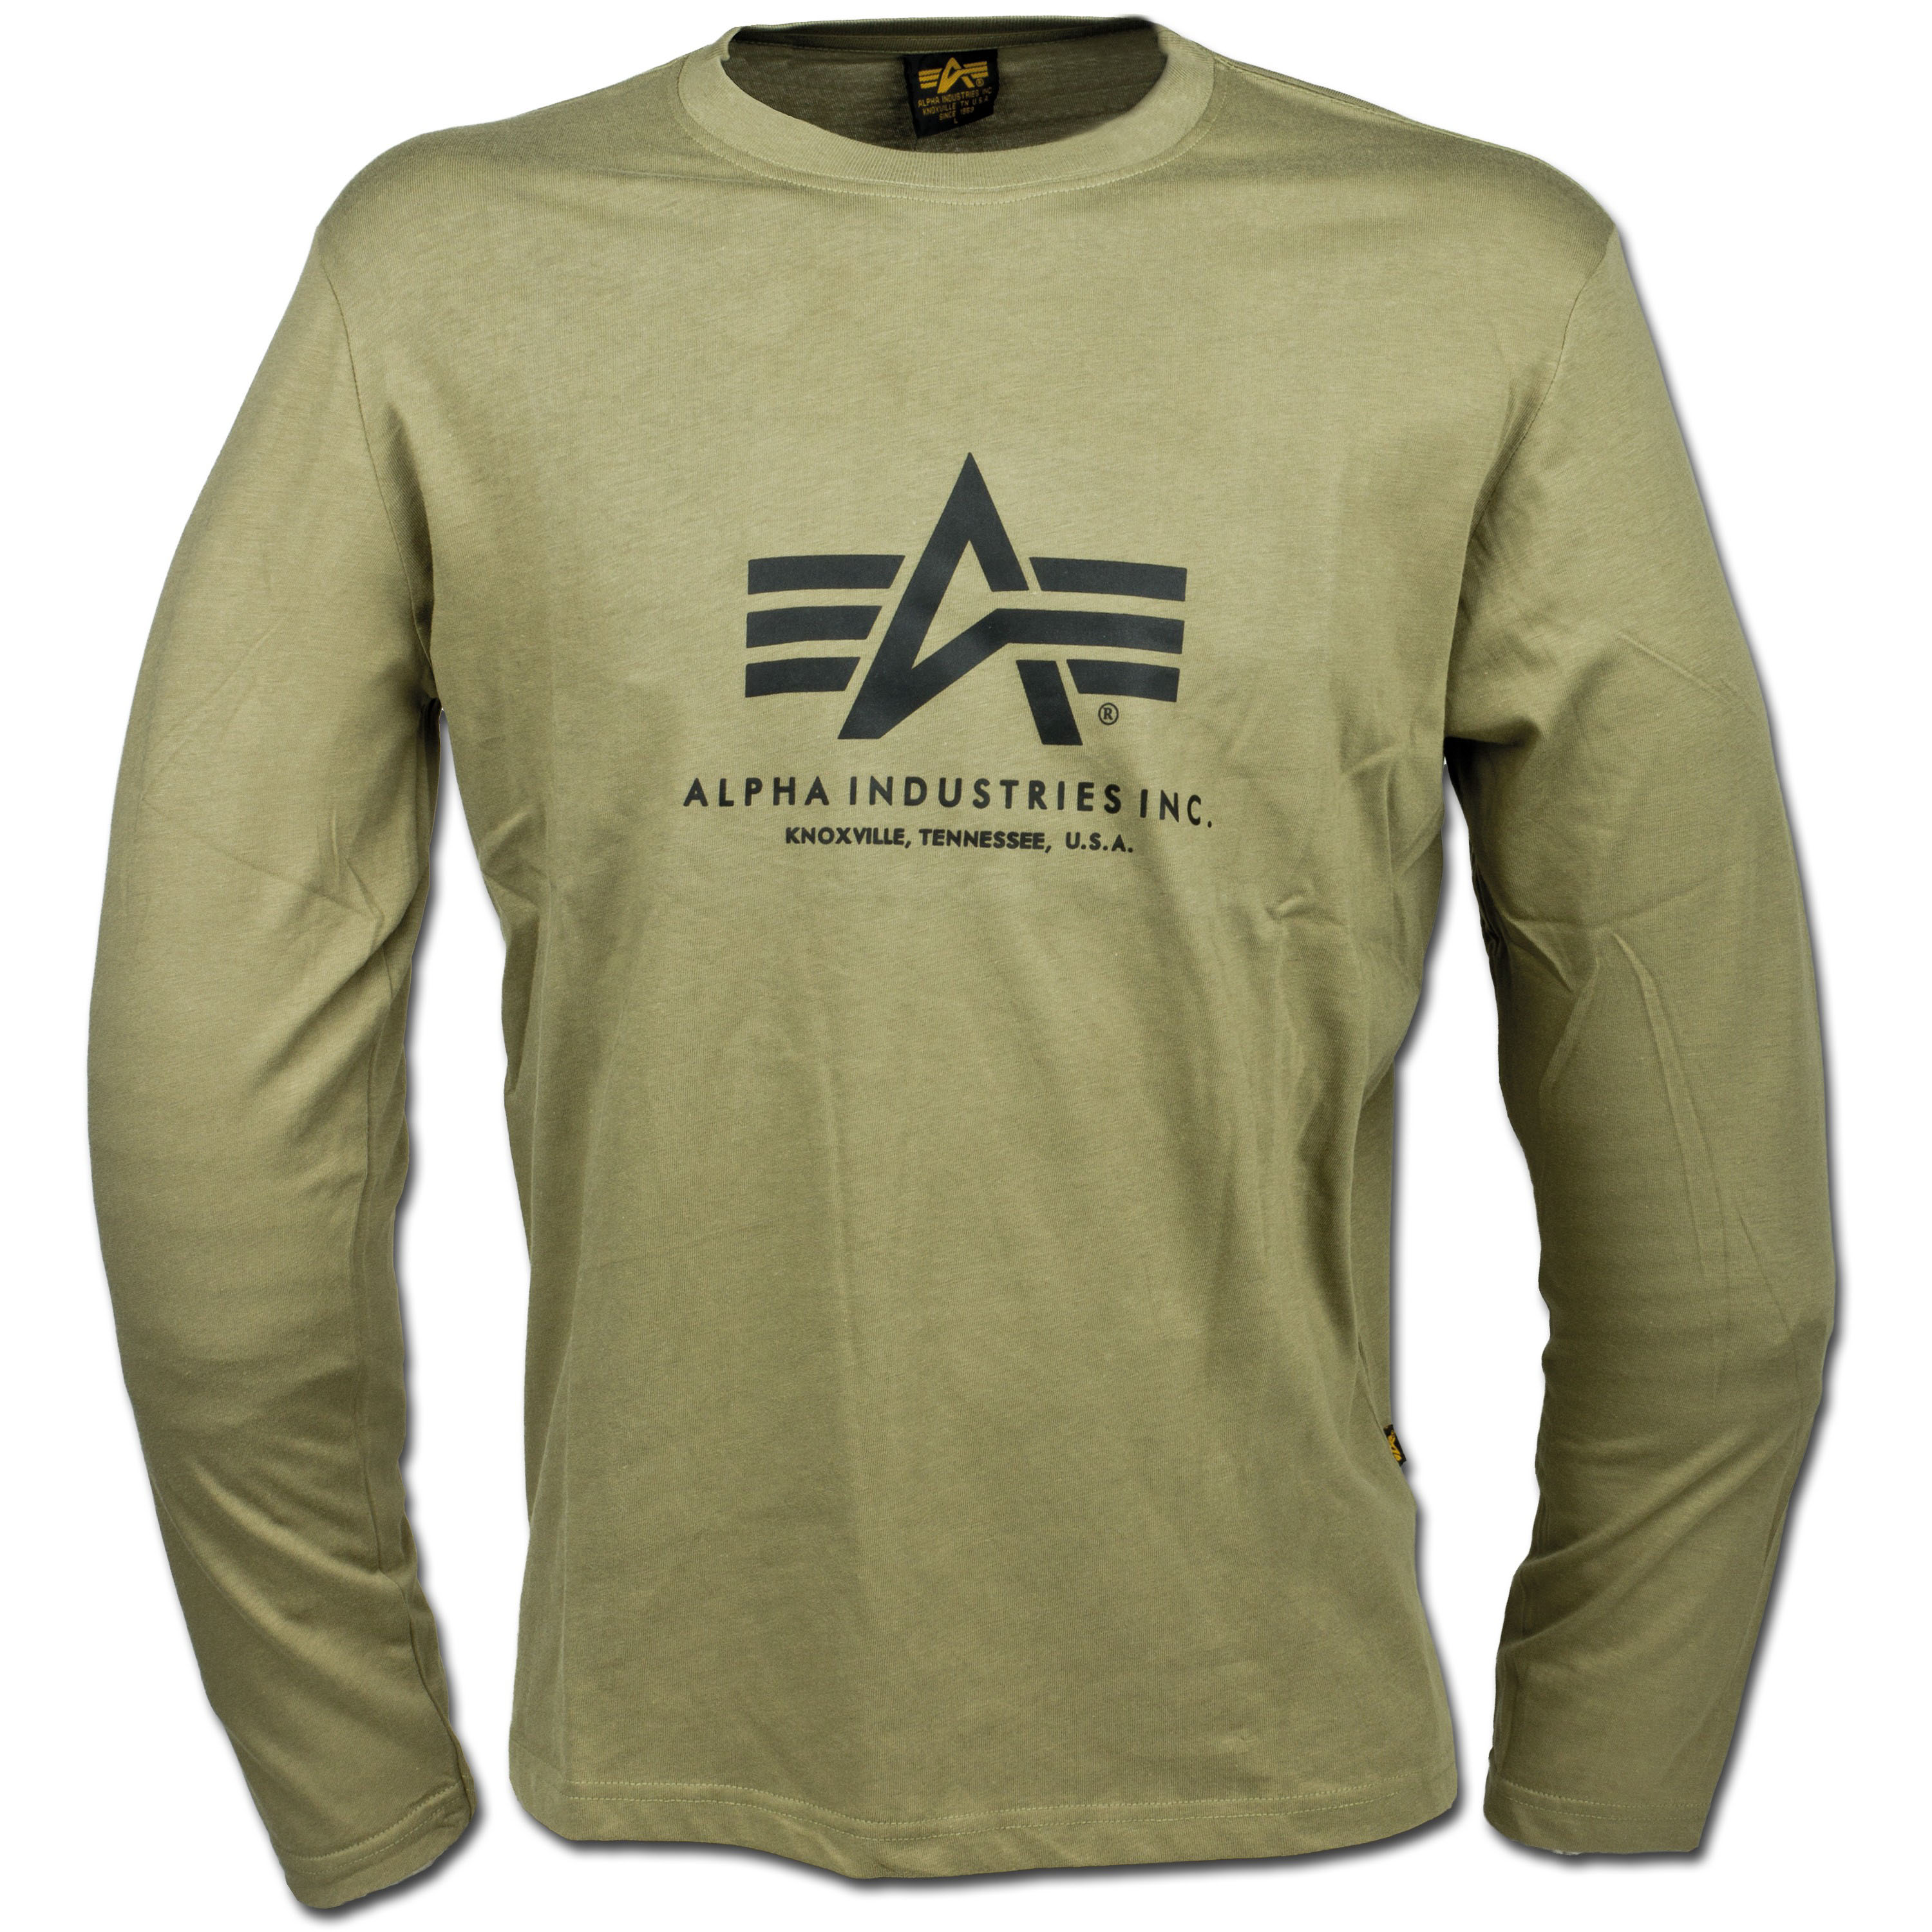 | | T-Shirt Shirts Clothing olive | Industries Industries | Long Alpha Shirts Arm | T-Shirt Long olive Alpha Men Arm